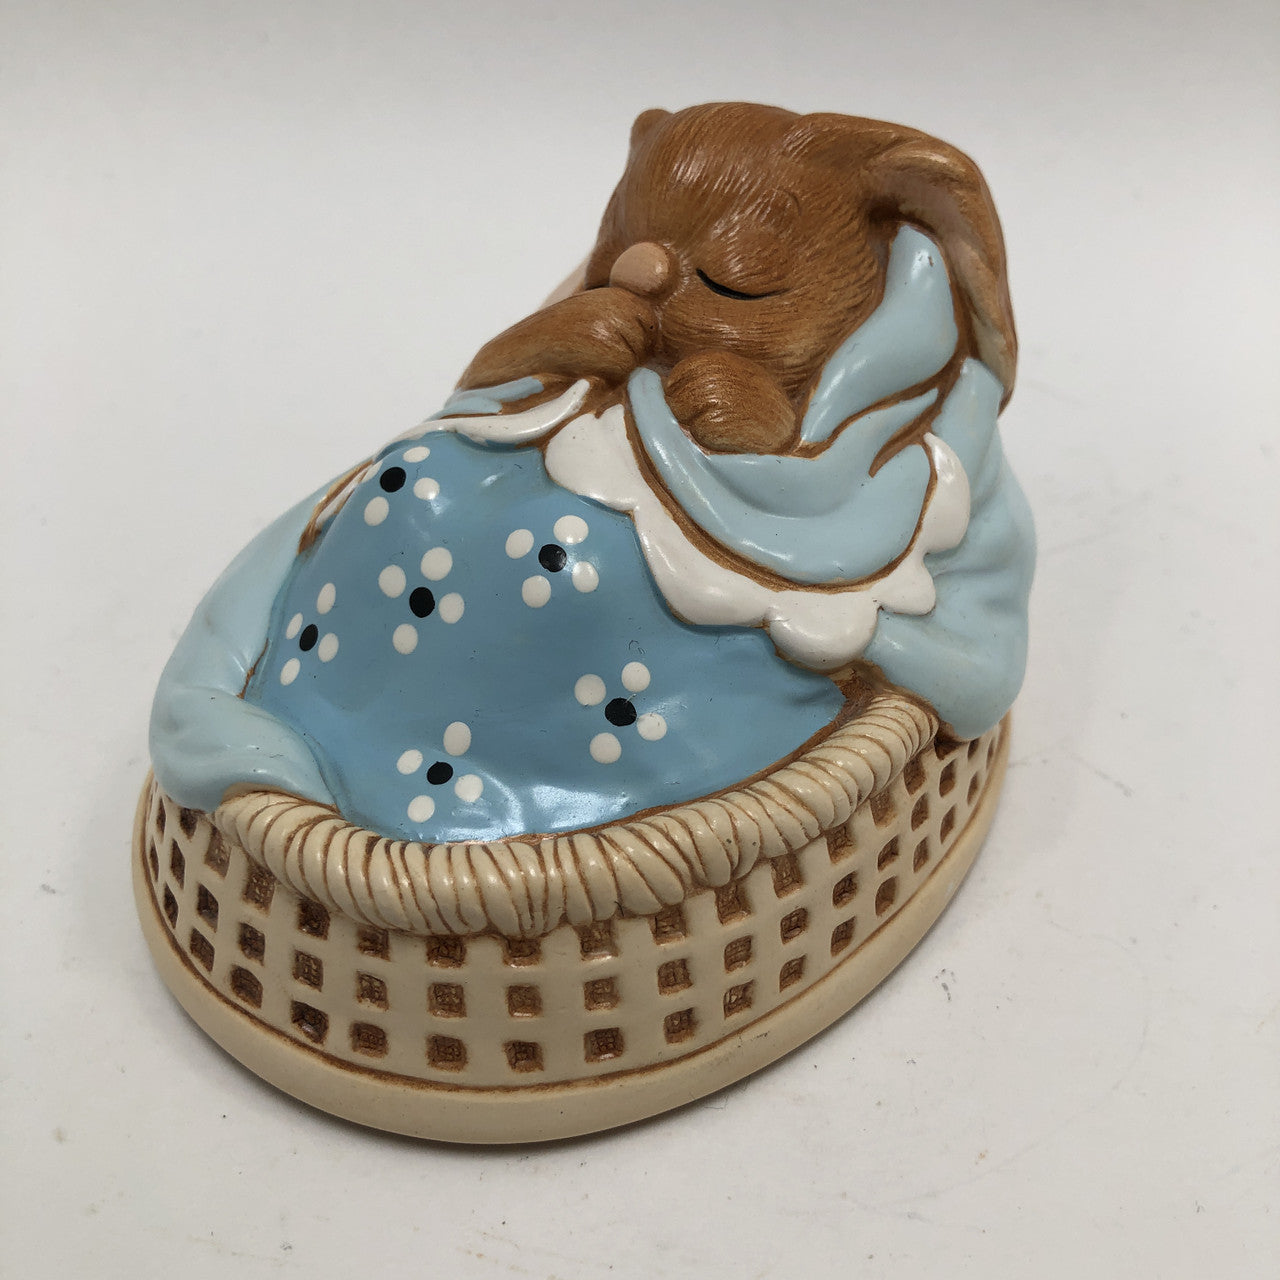 Pendelfin rabbit figurine - Poppet - sleeping bunny, blue three